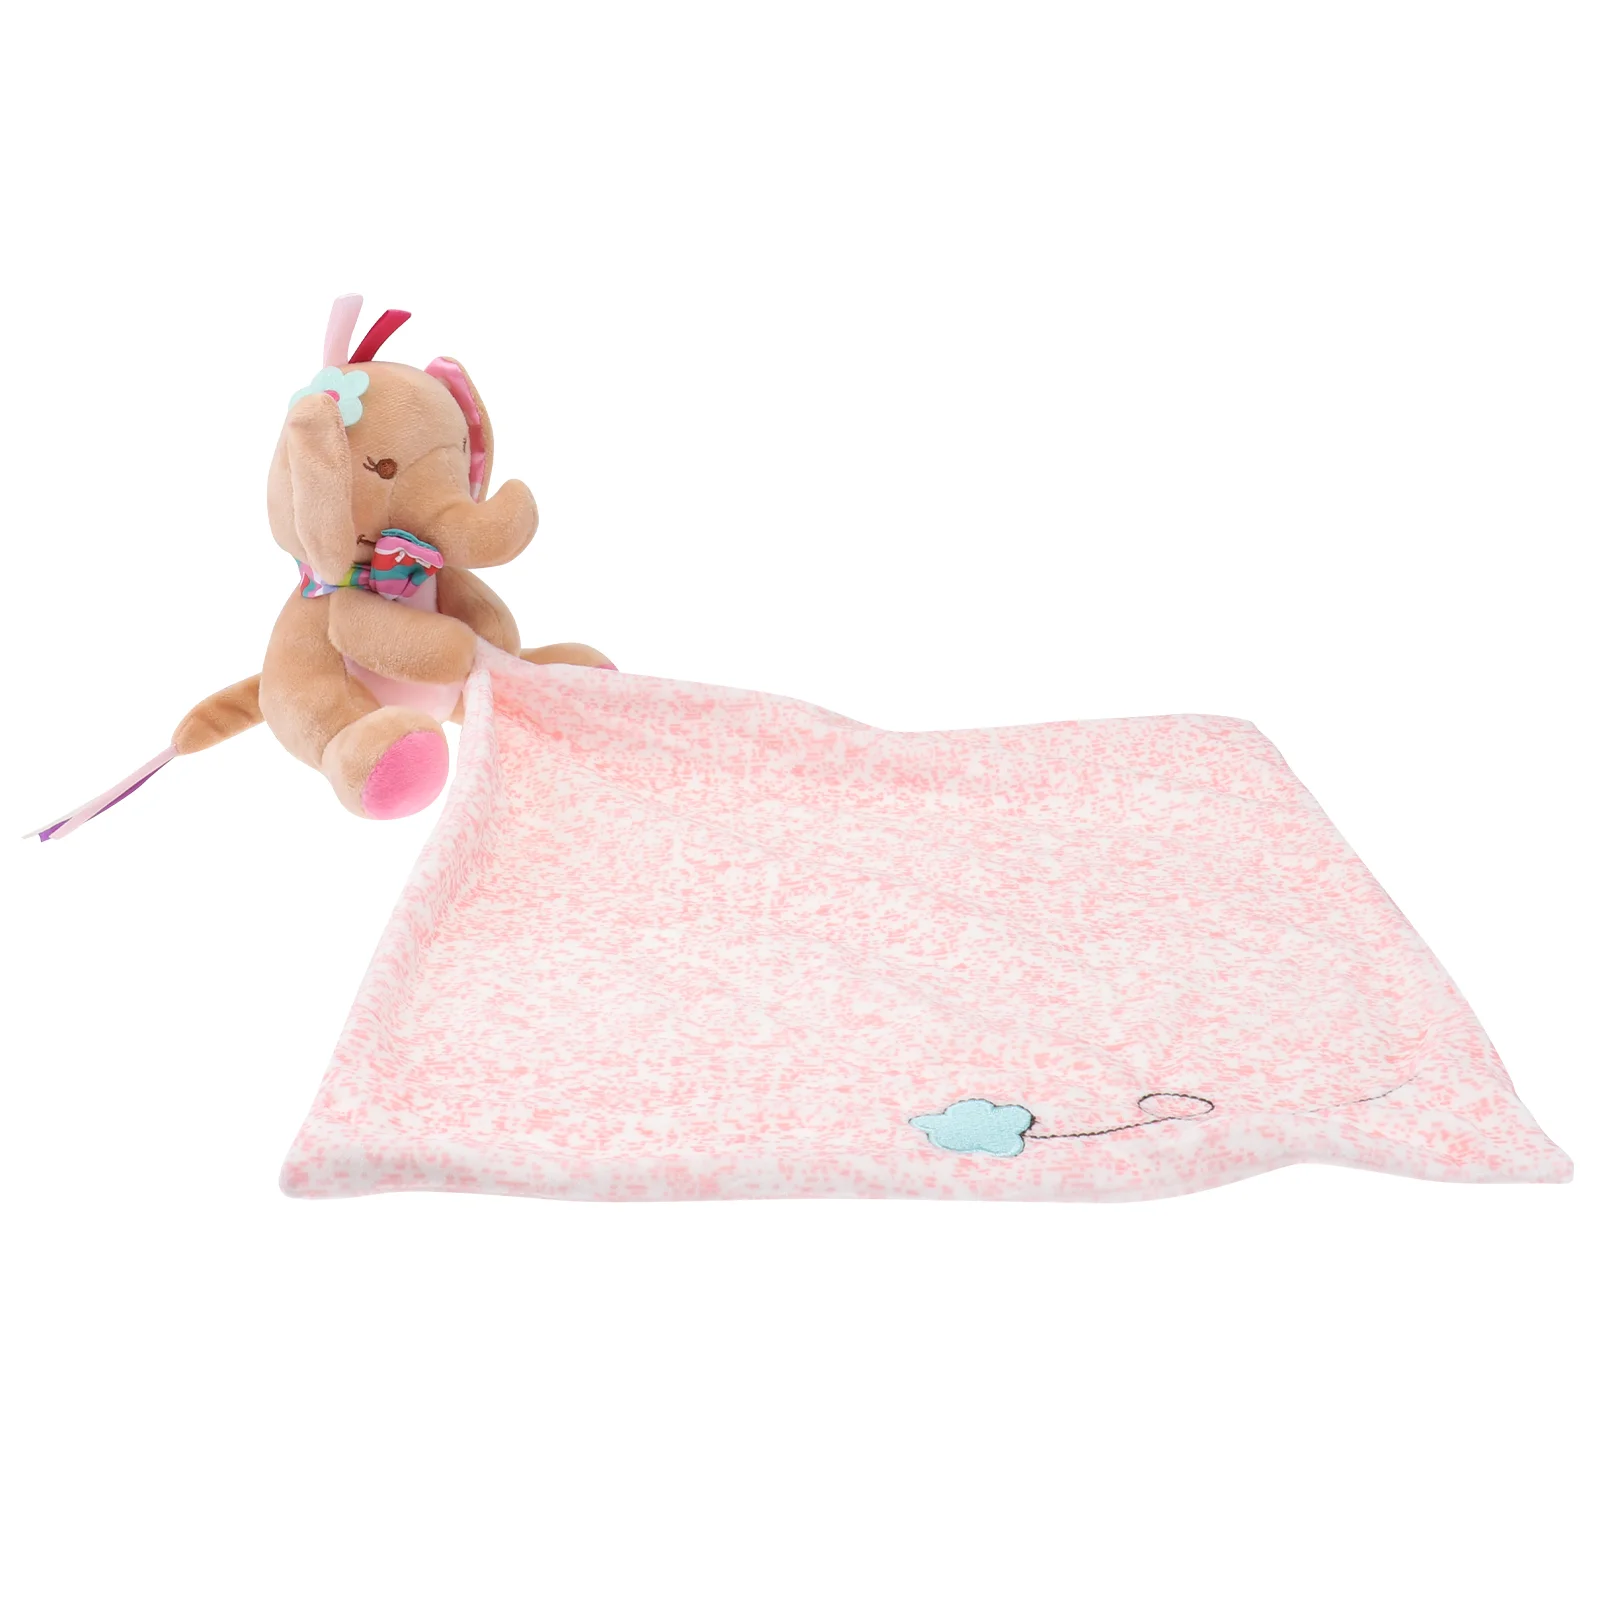 

Animal Baby Bib Sleeping Appease Toy Newborn Children Animals Plush Toys Towels Feeding Accessories (Elephant)